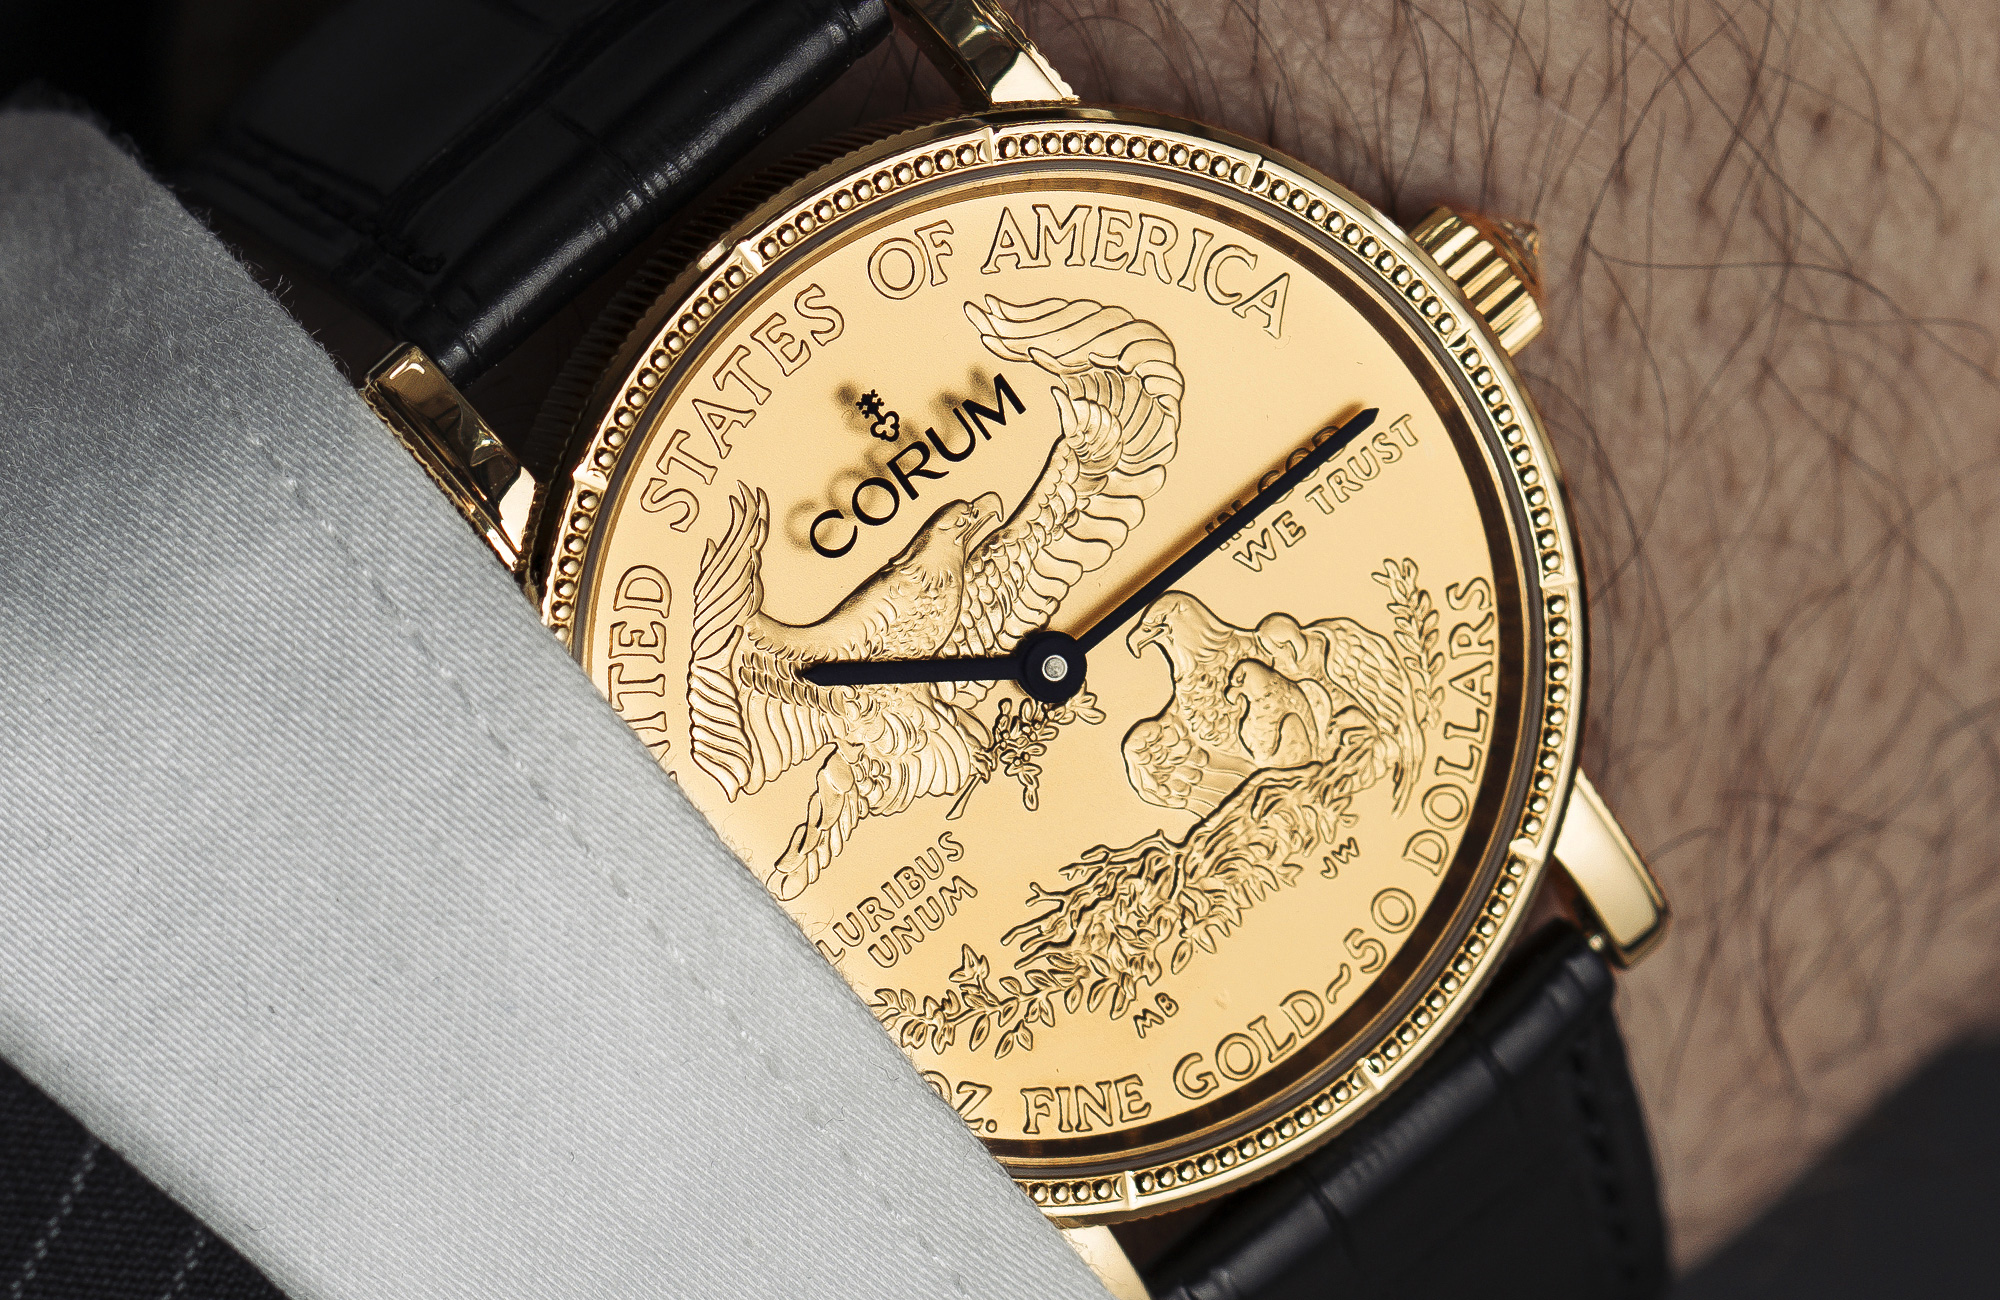 Heritage Coin Watch (C082/03167) by CORUM - CORUM Suisse